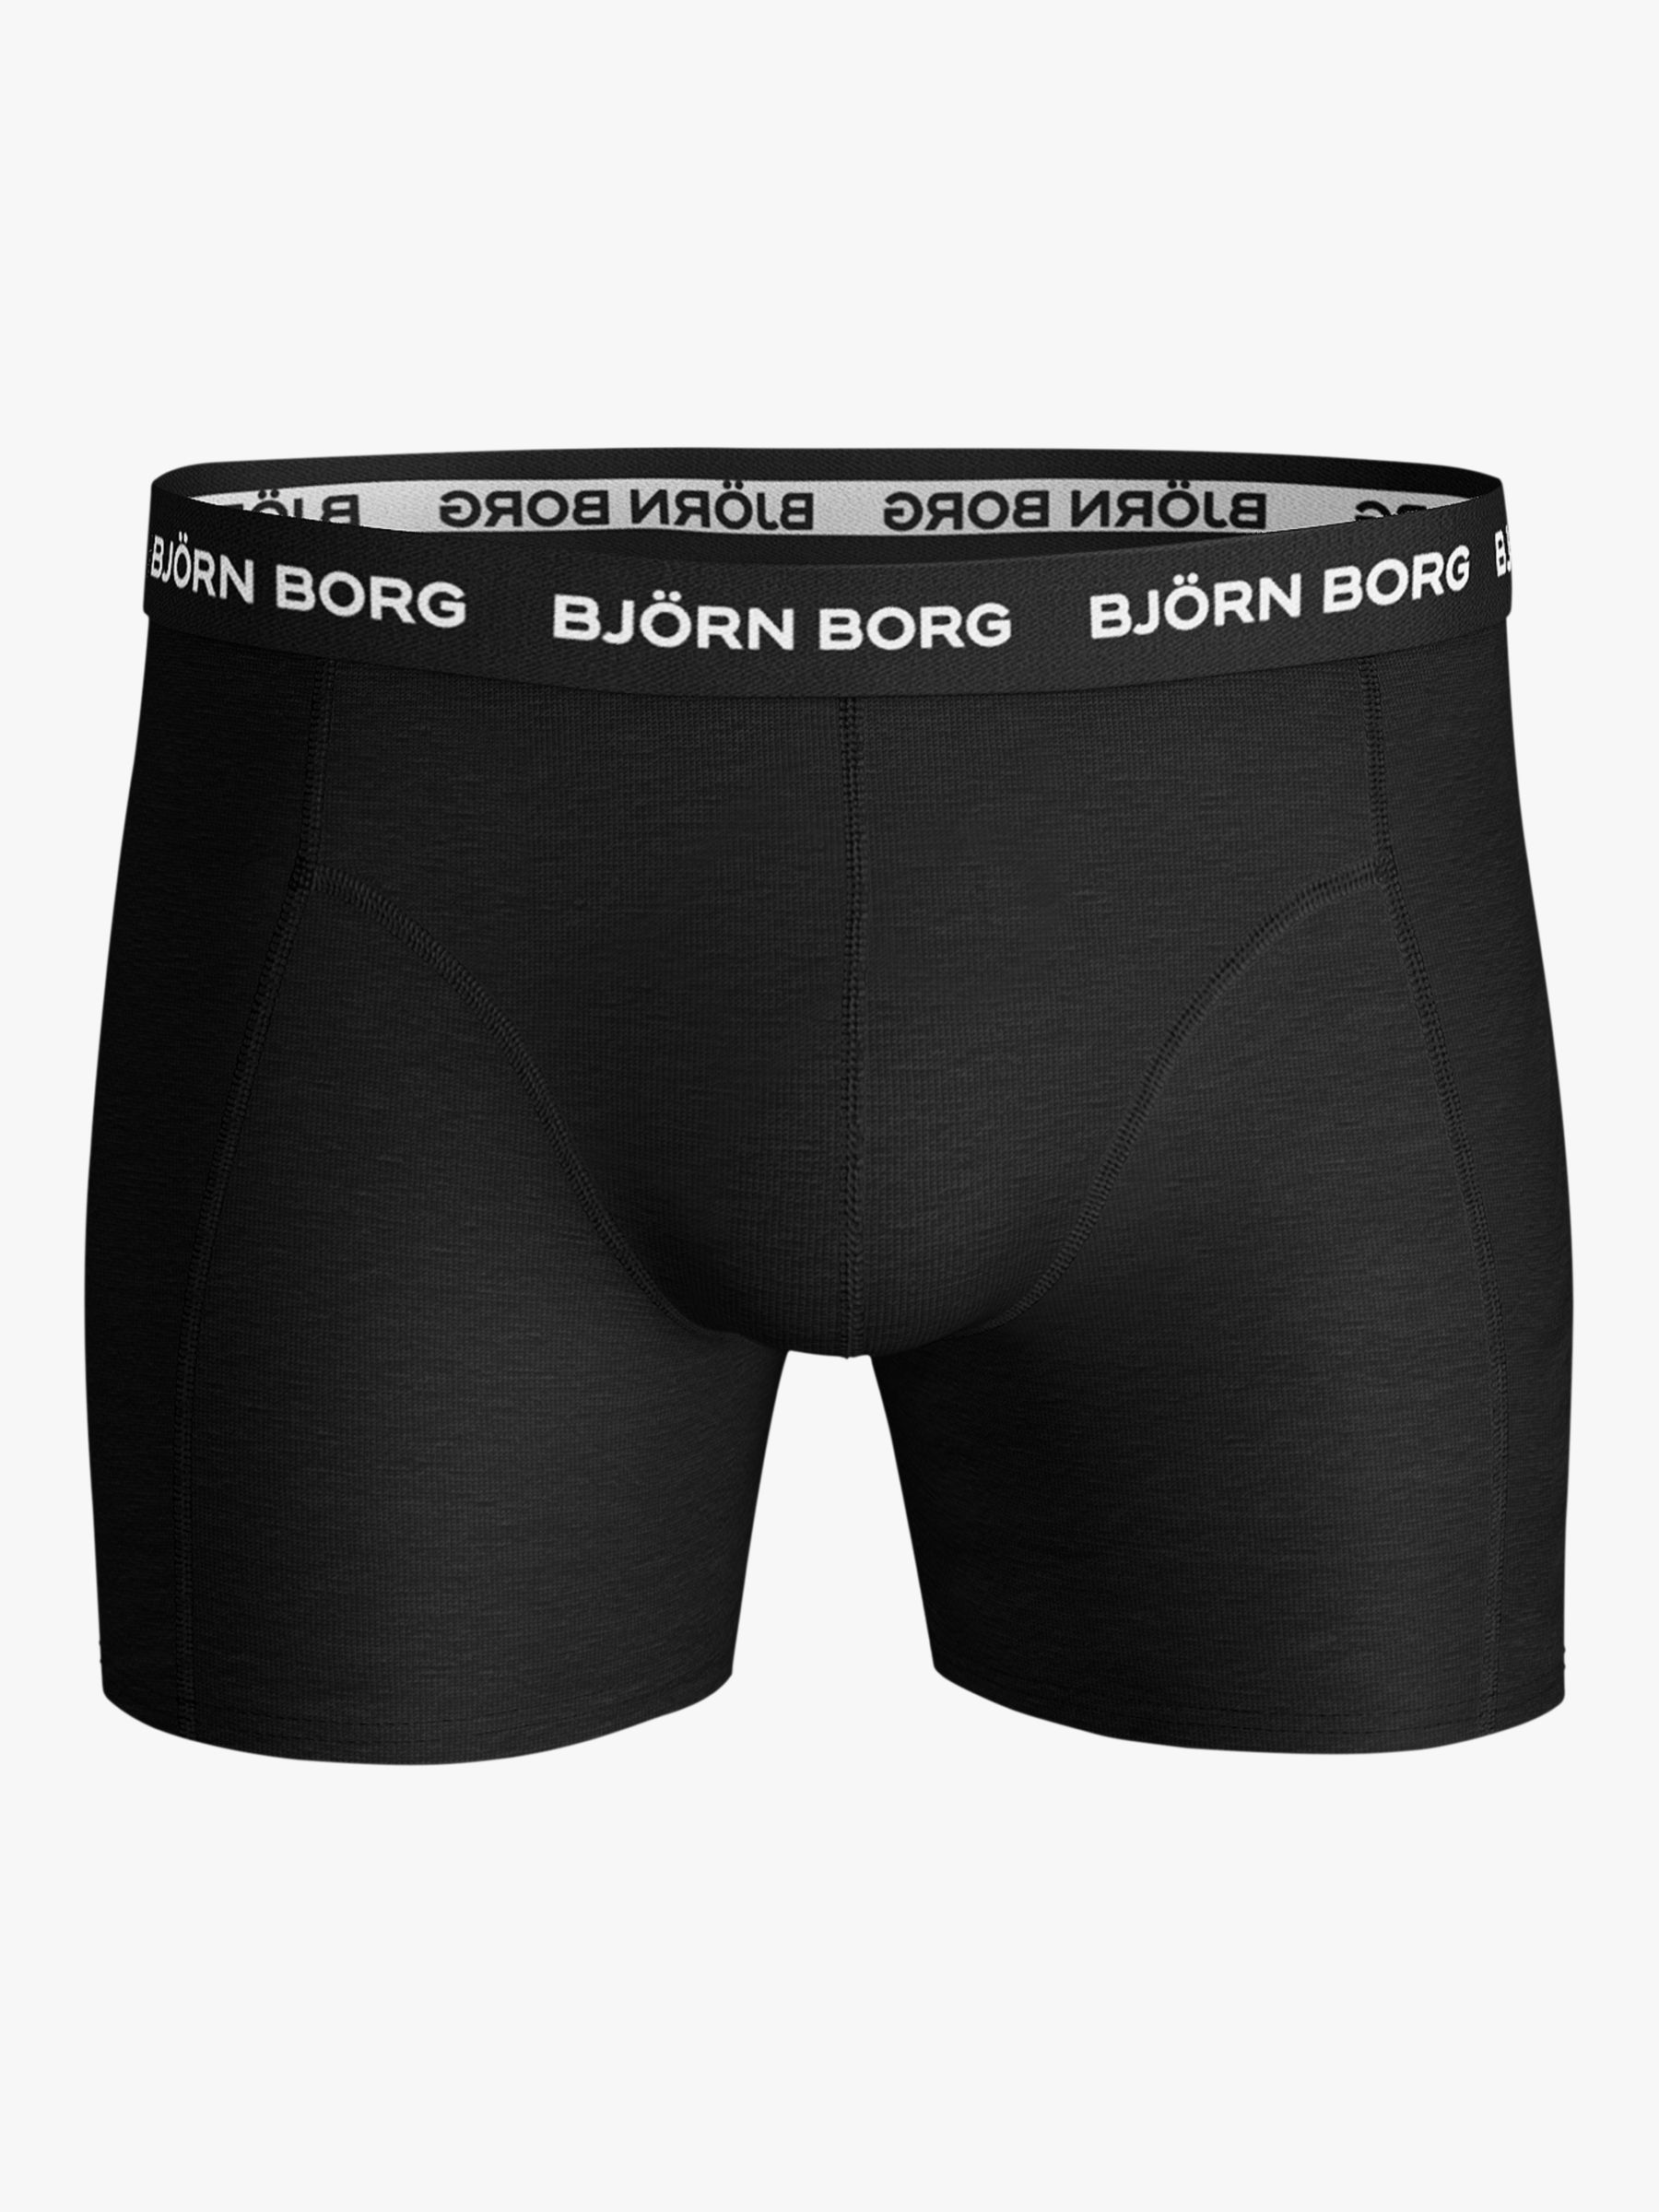 Björn Borg Solid Trunks, Pack of 5, Black, S